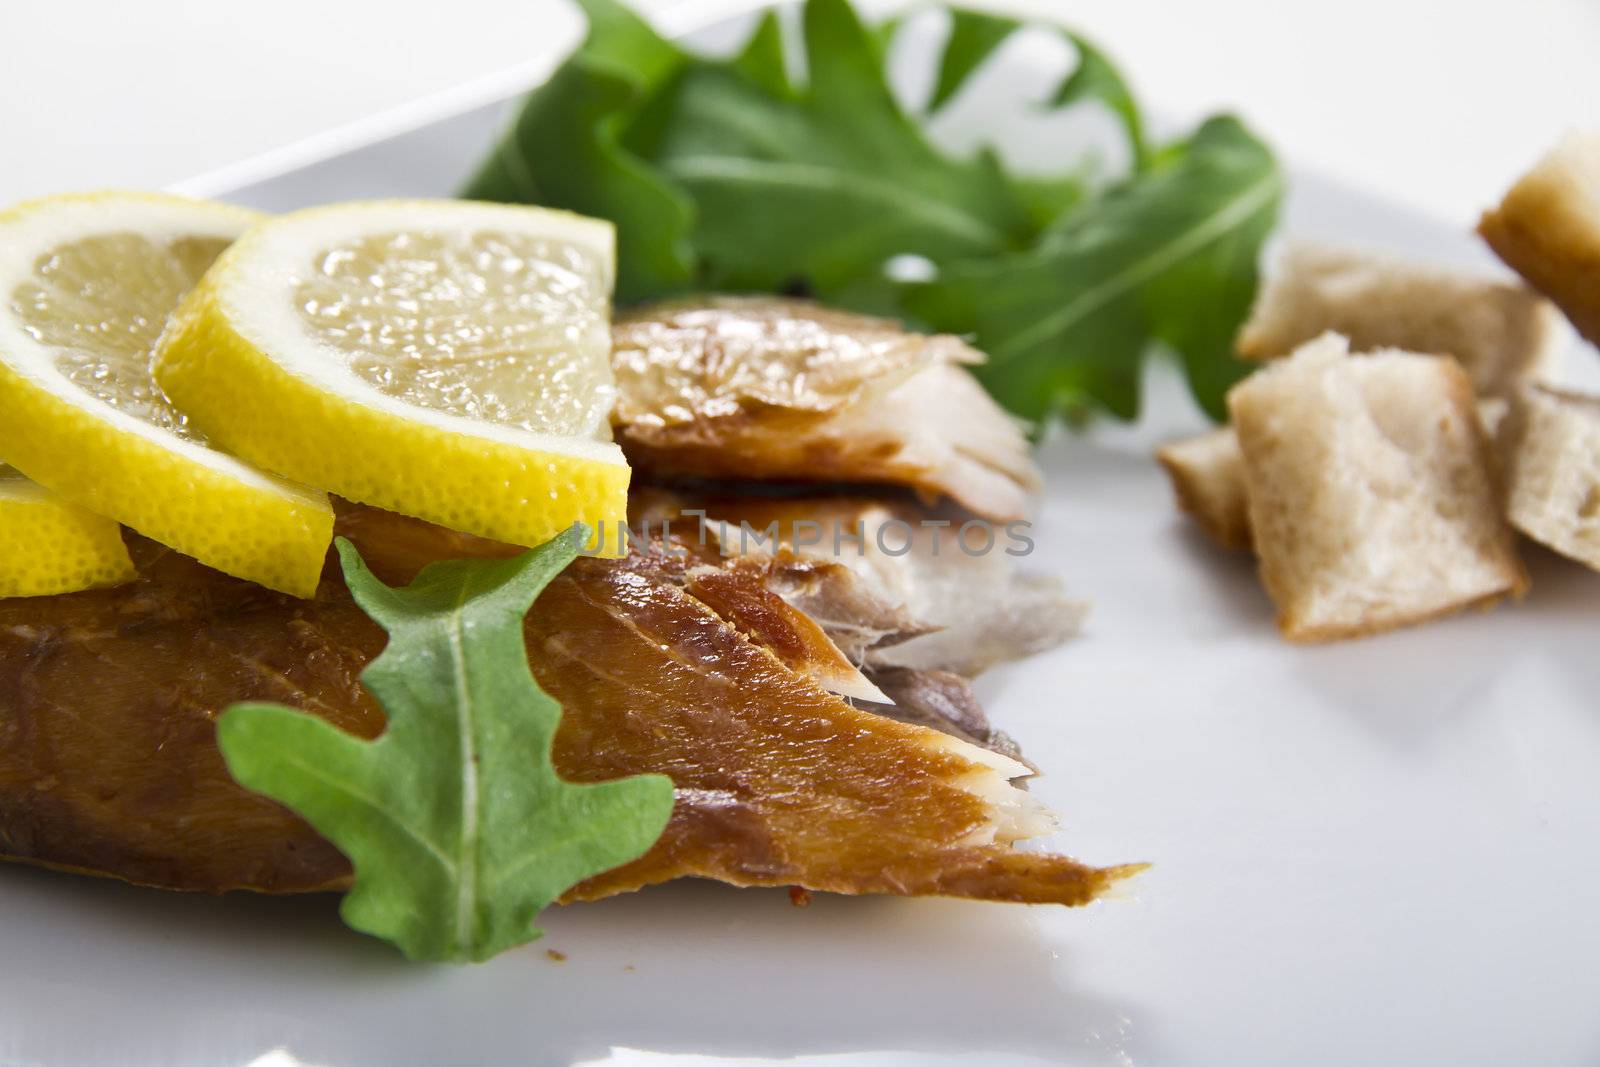 Smoked fish with lemon and salad by caldix